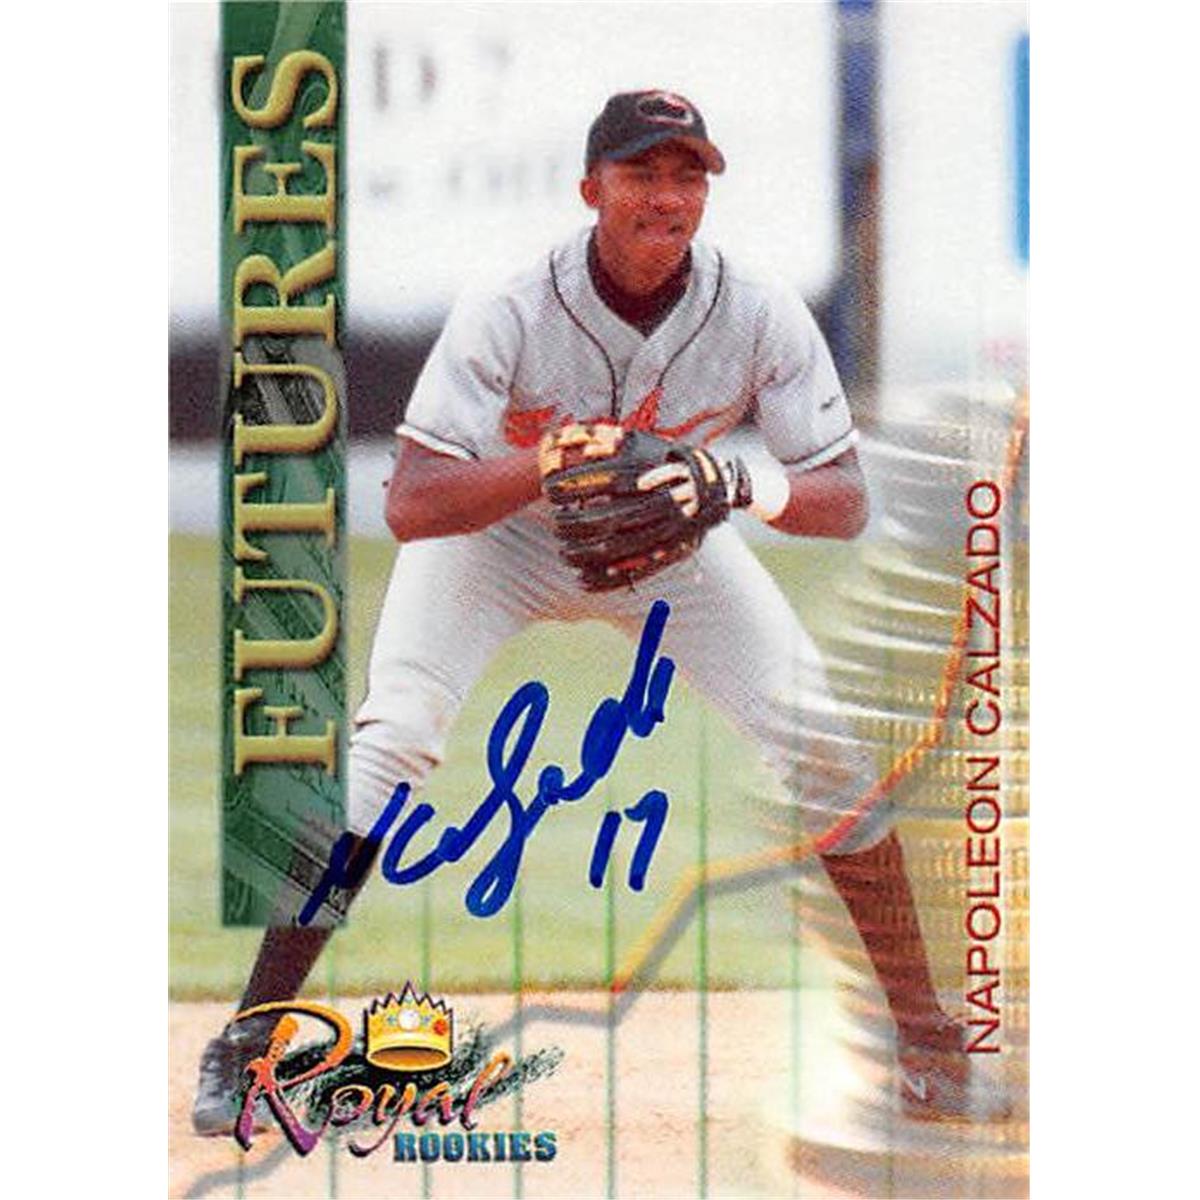 343987 Napolean Calzado Autographed Baseball Card - Baltimore Orioles, FT 2000 Royal Rookies No. 33 -  Autograph Warehouse